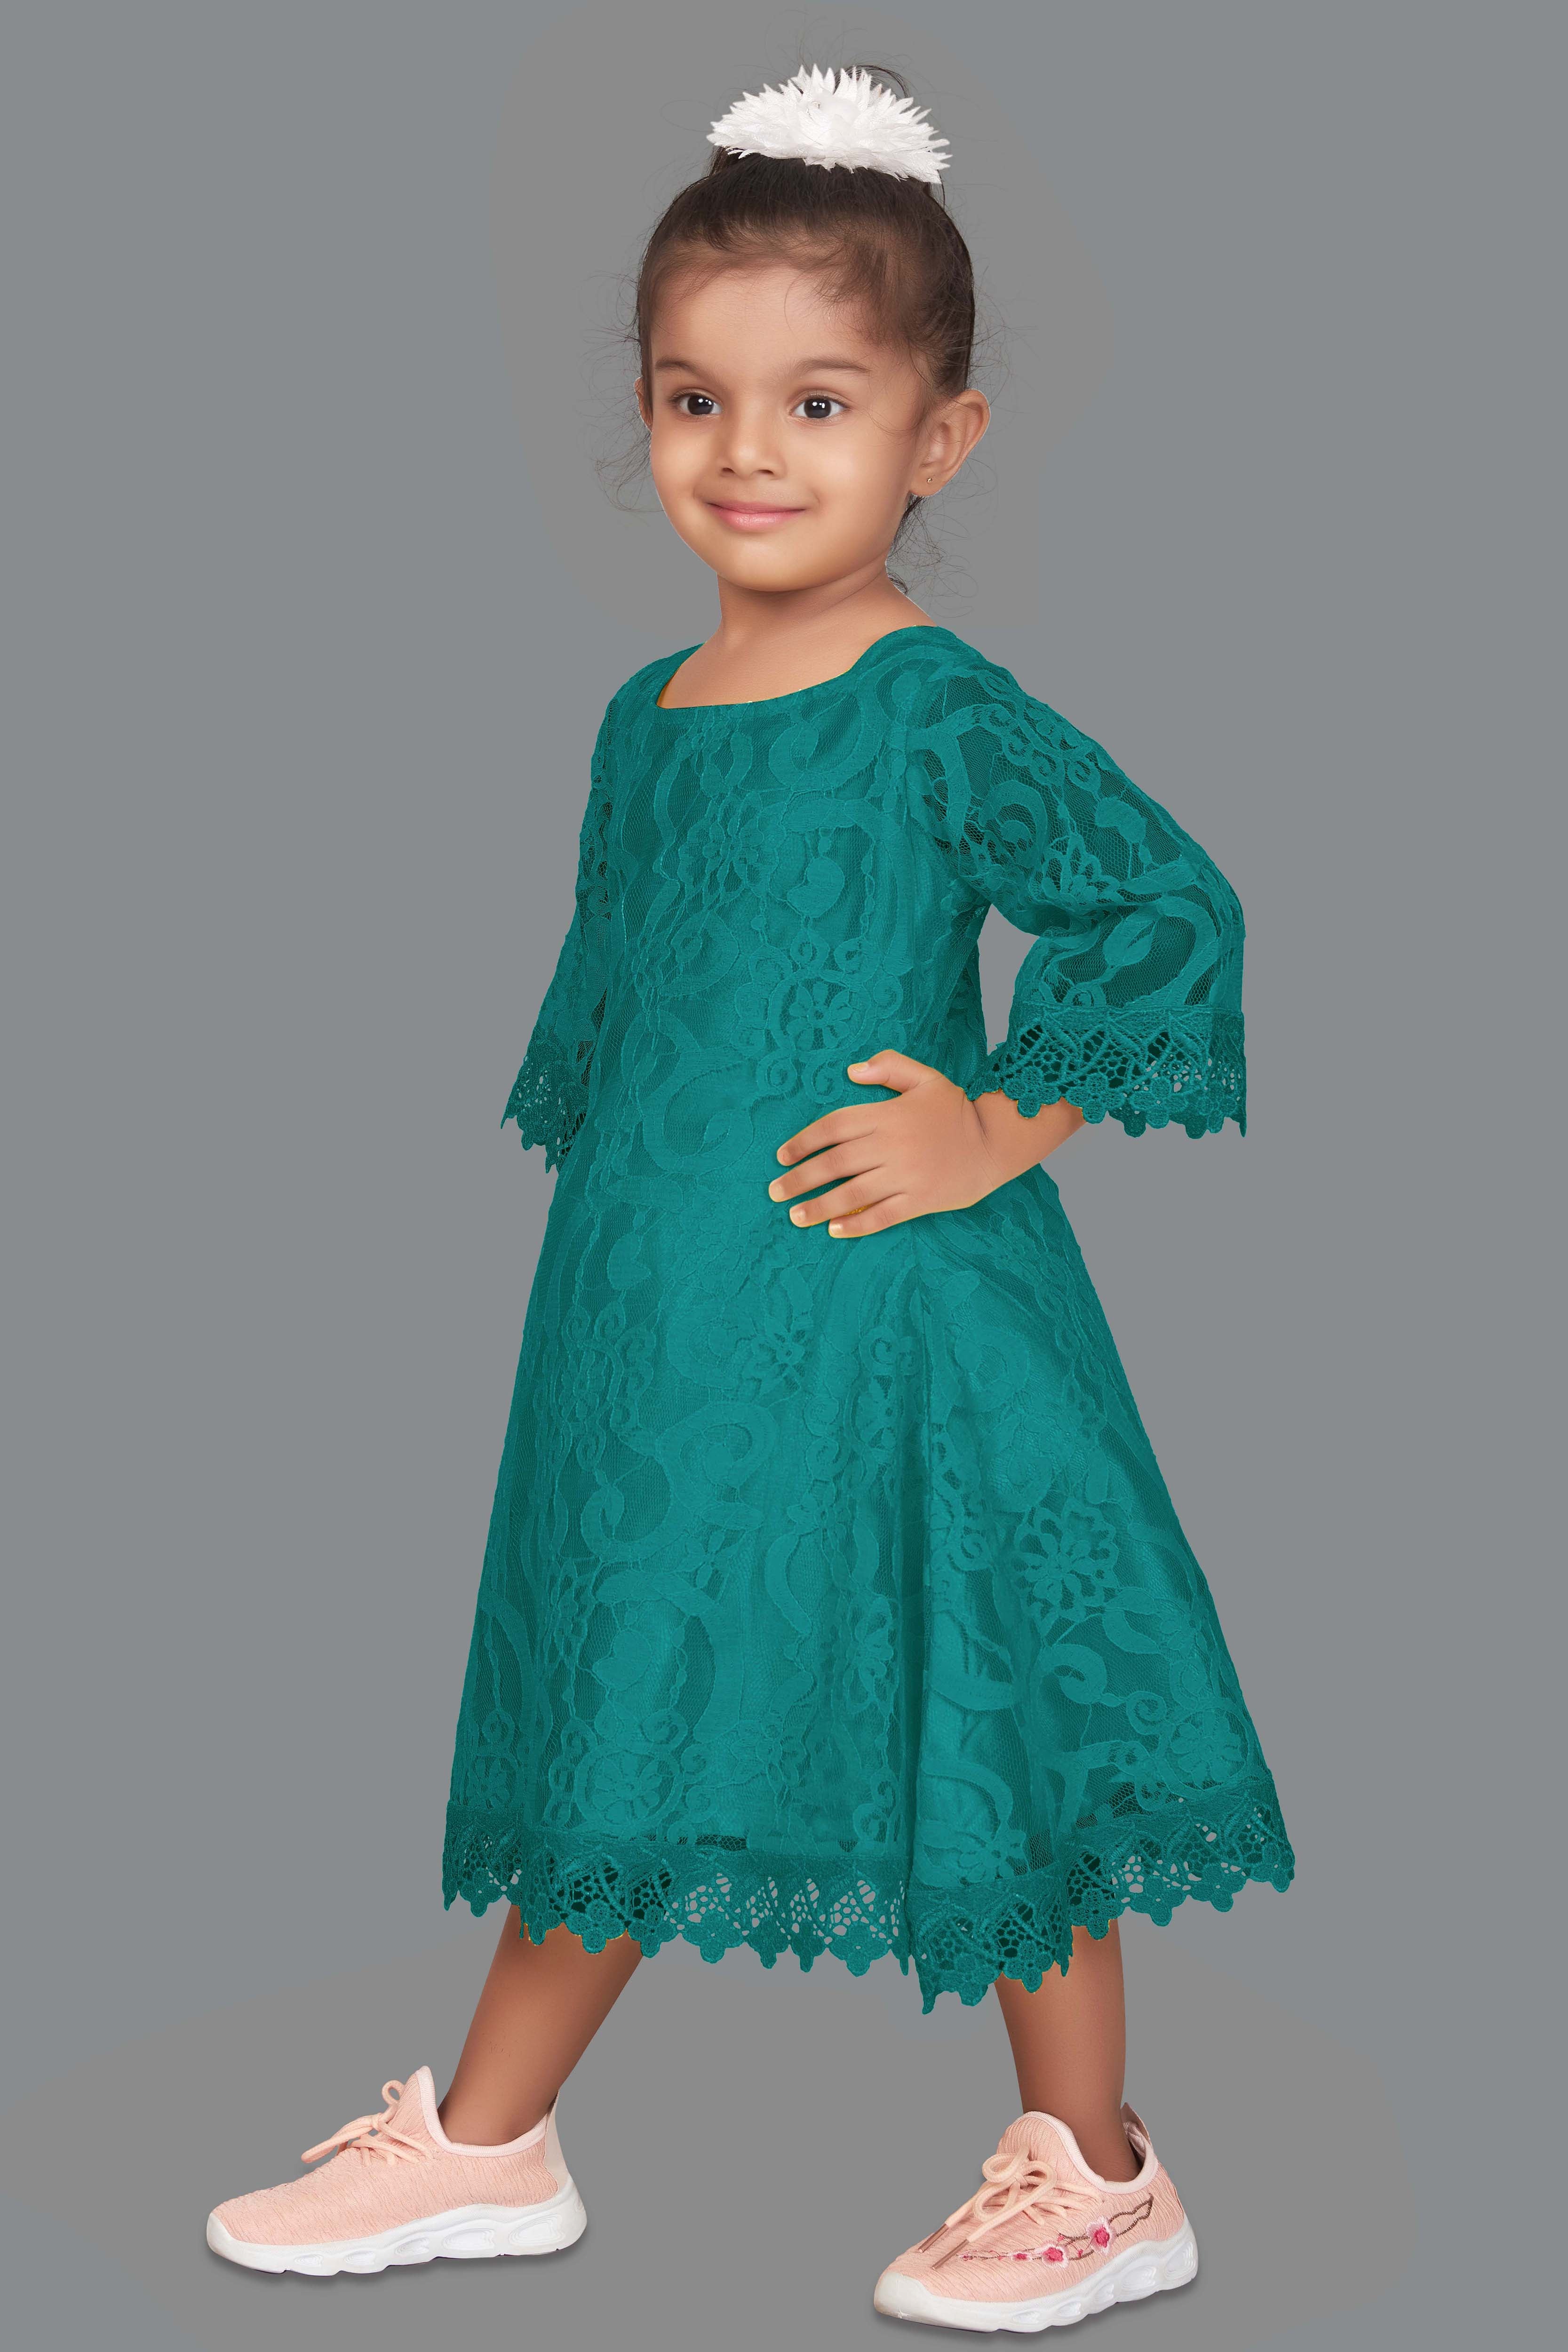 Buy First Birthday Dress, Toddler Lace Dress, Pink Flower Girl Dress, 2nd  Birthday Dress, Baby Wedding Dress Online in India - Etsy